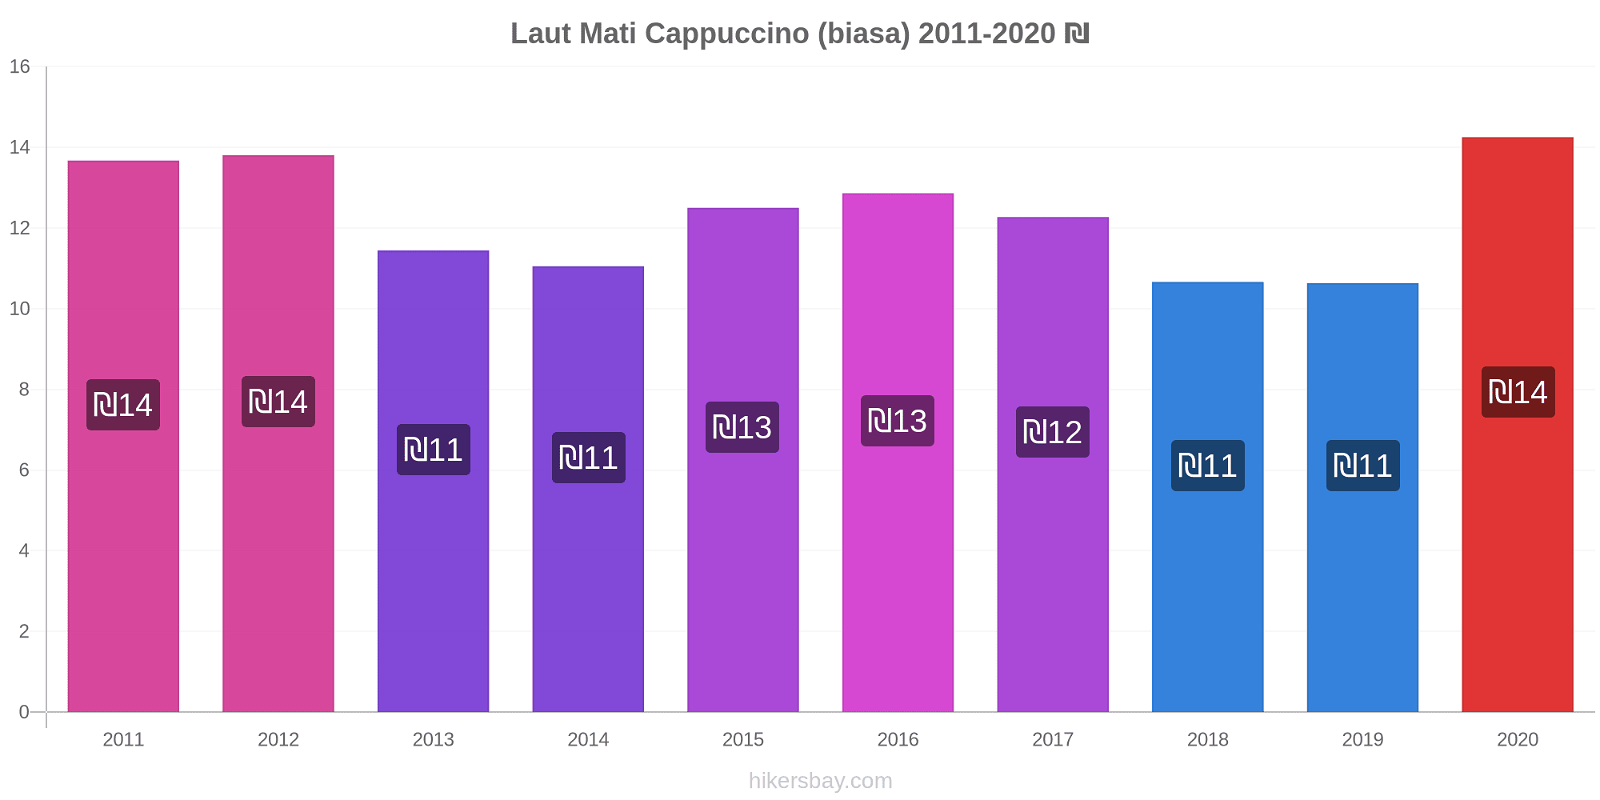 Laut Mati perubahan harga Cappuccino (biasa) hikersbay.com